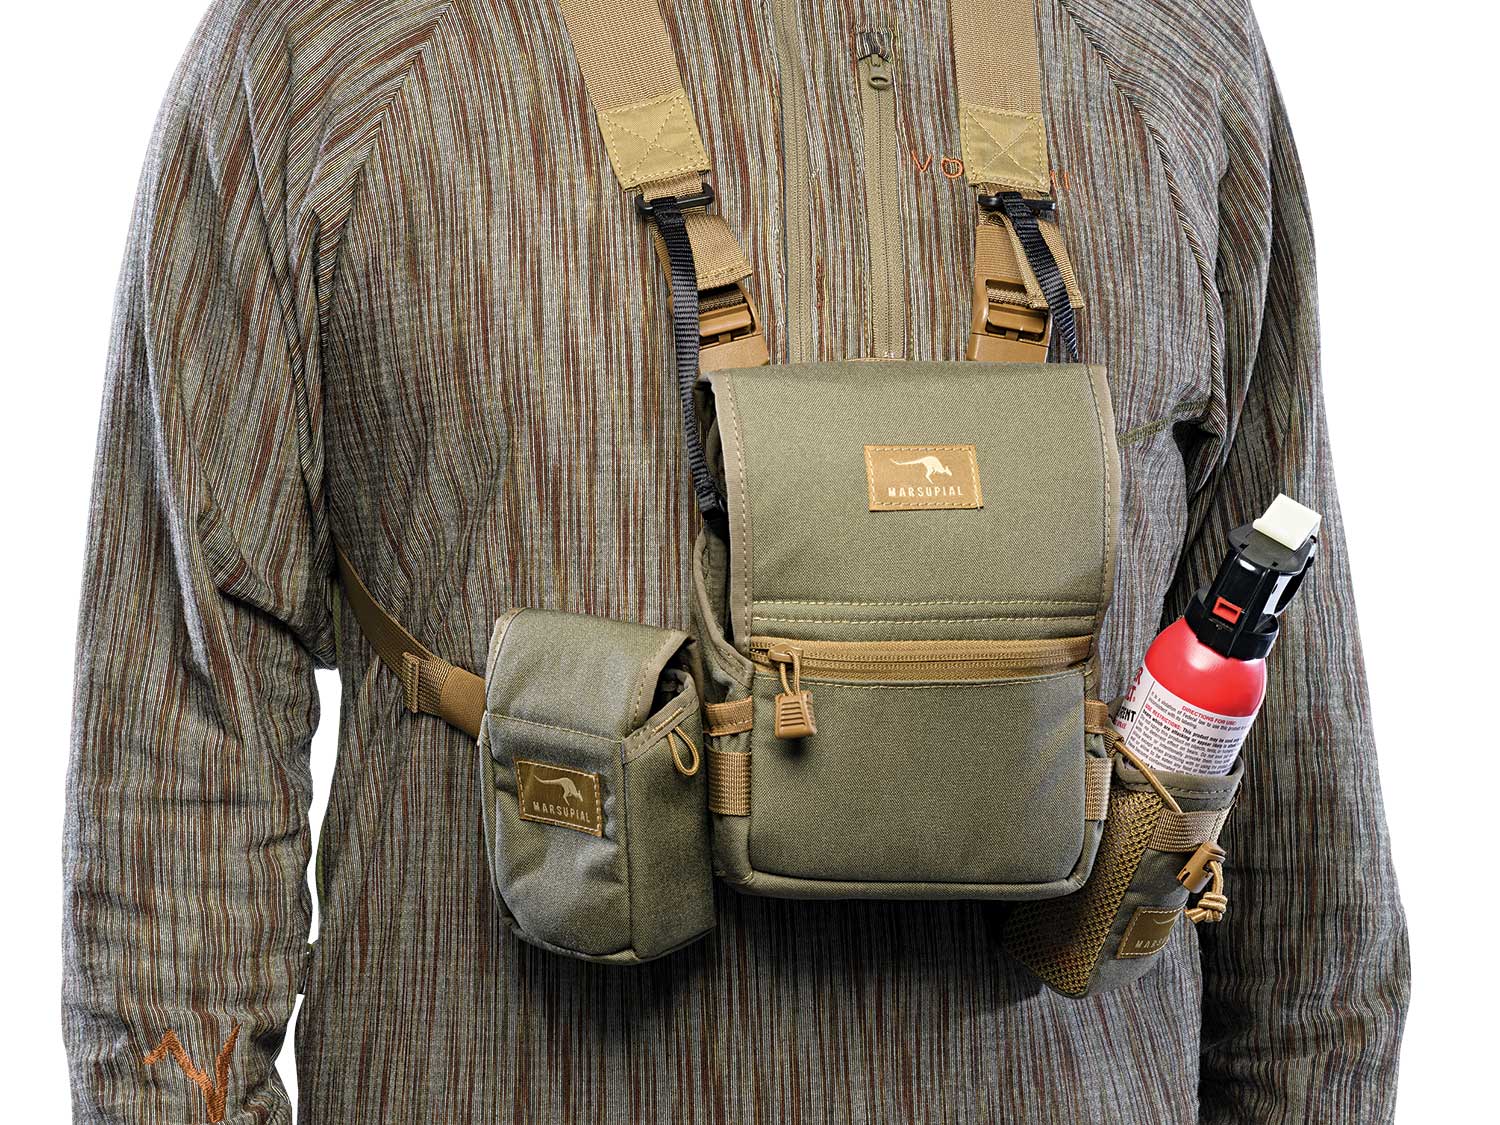 Marsupial Gear Bino Pack on a hunting gear model.